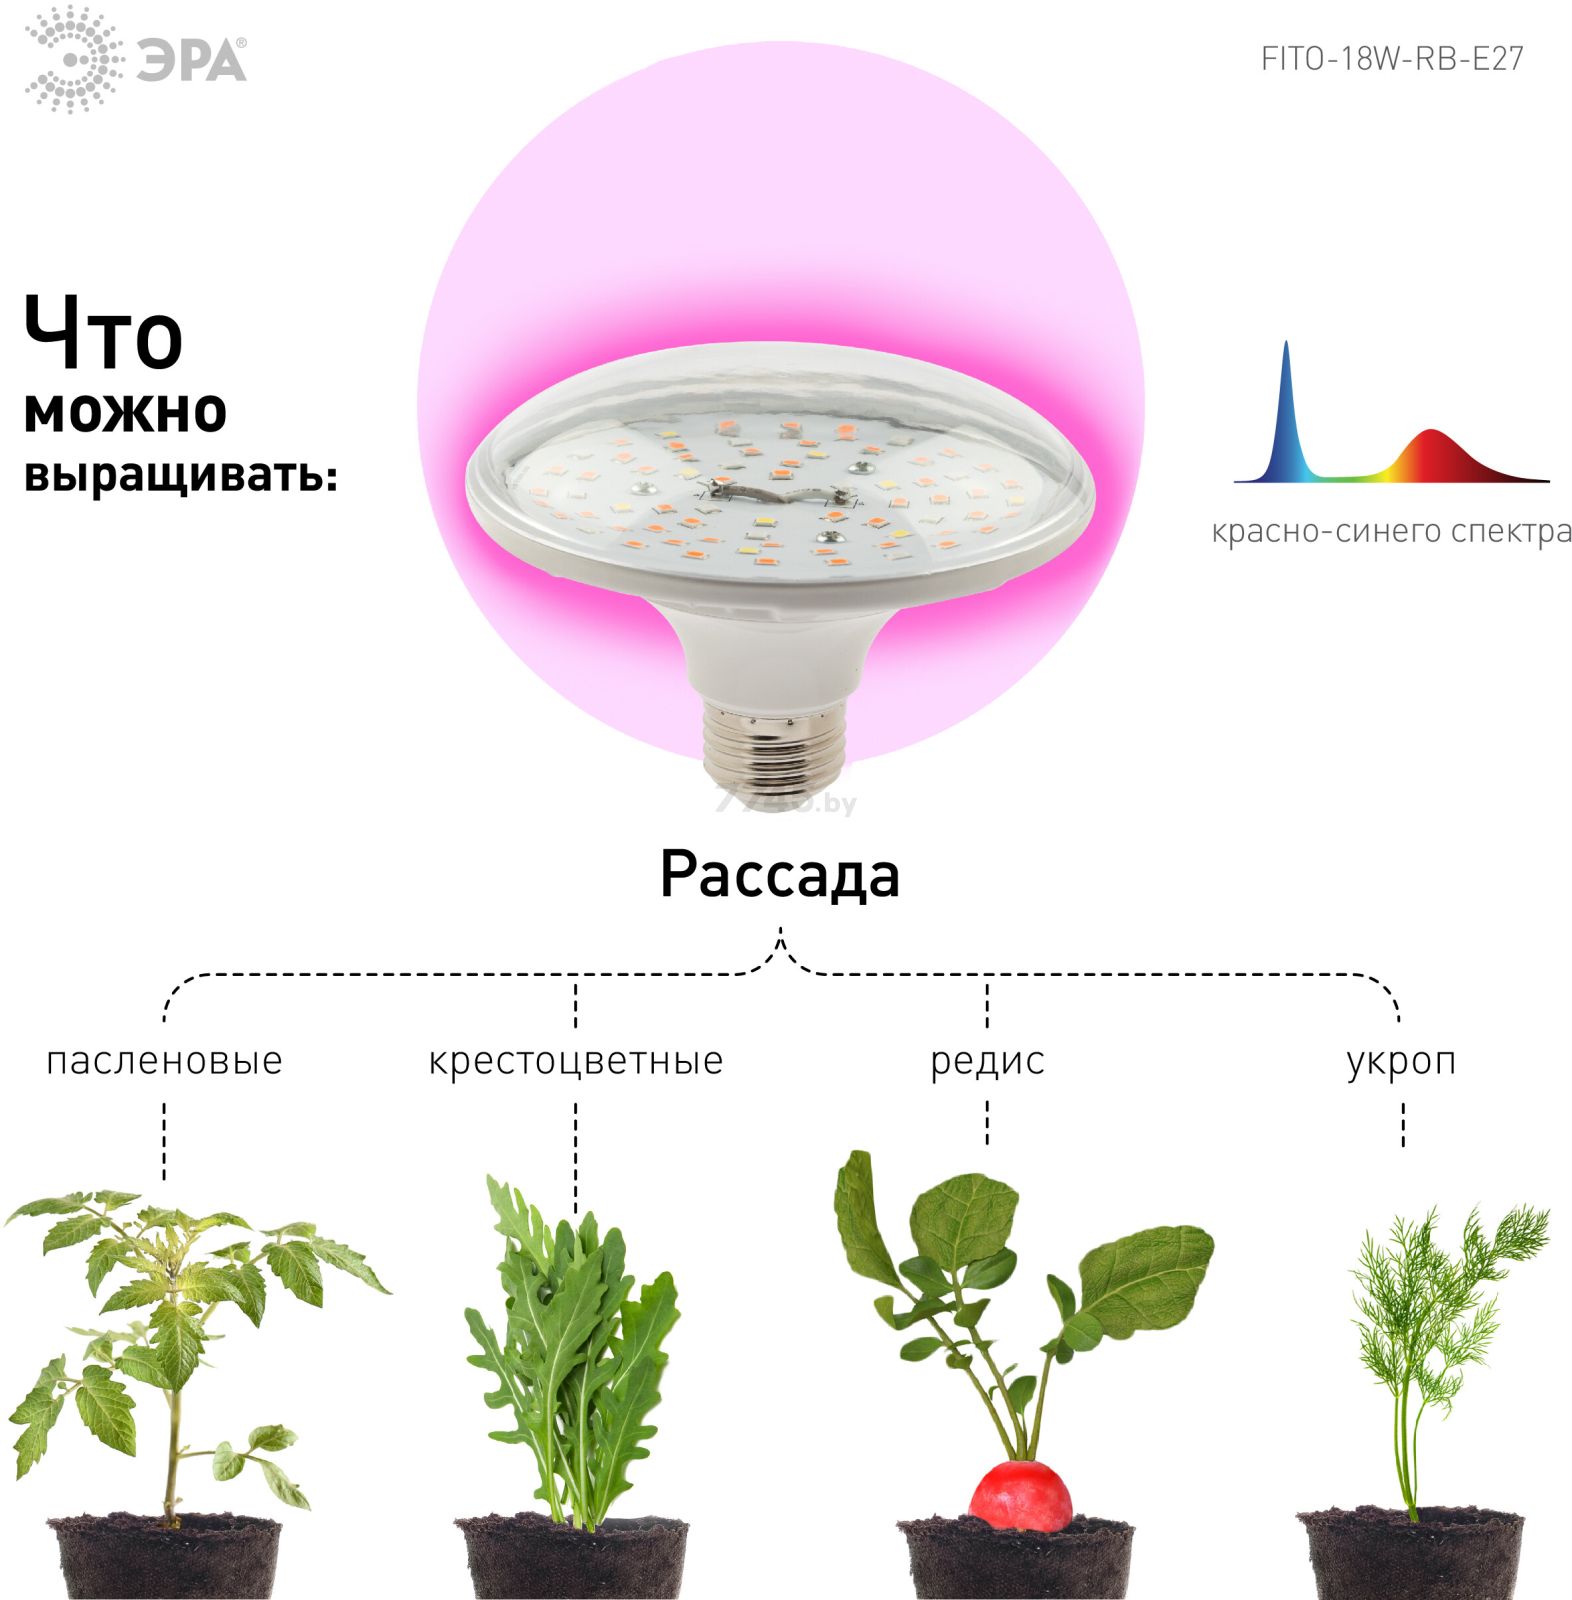 Фитолампа для растений красно-синего спектра ЭРА FITO-18W-RB-E27 Е27 18 ВТ - Фото 7